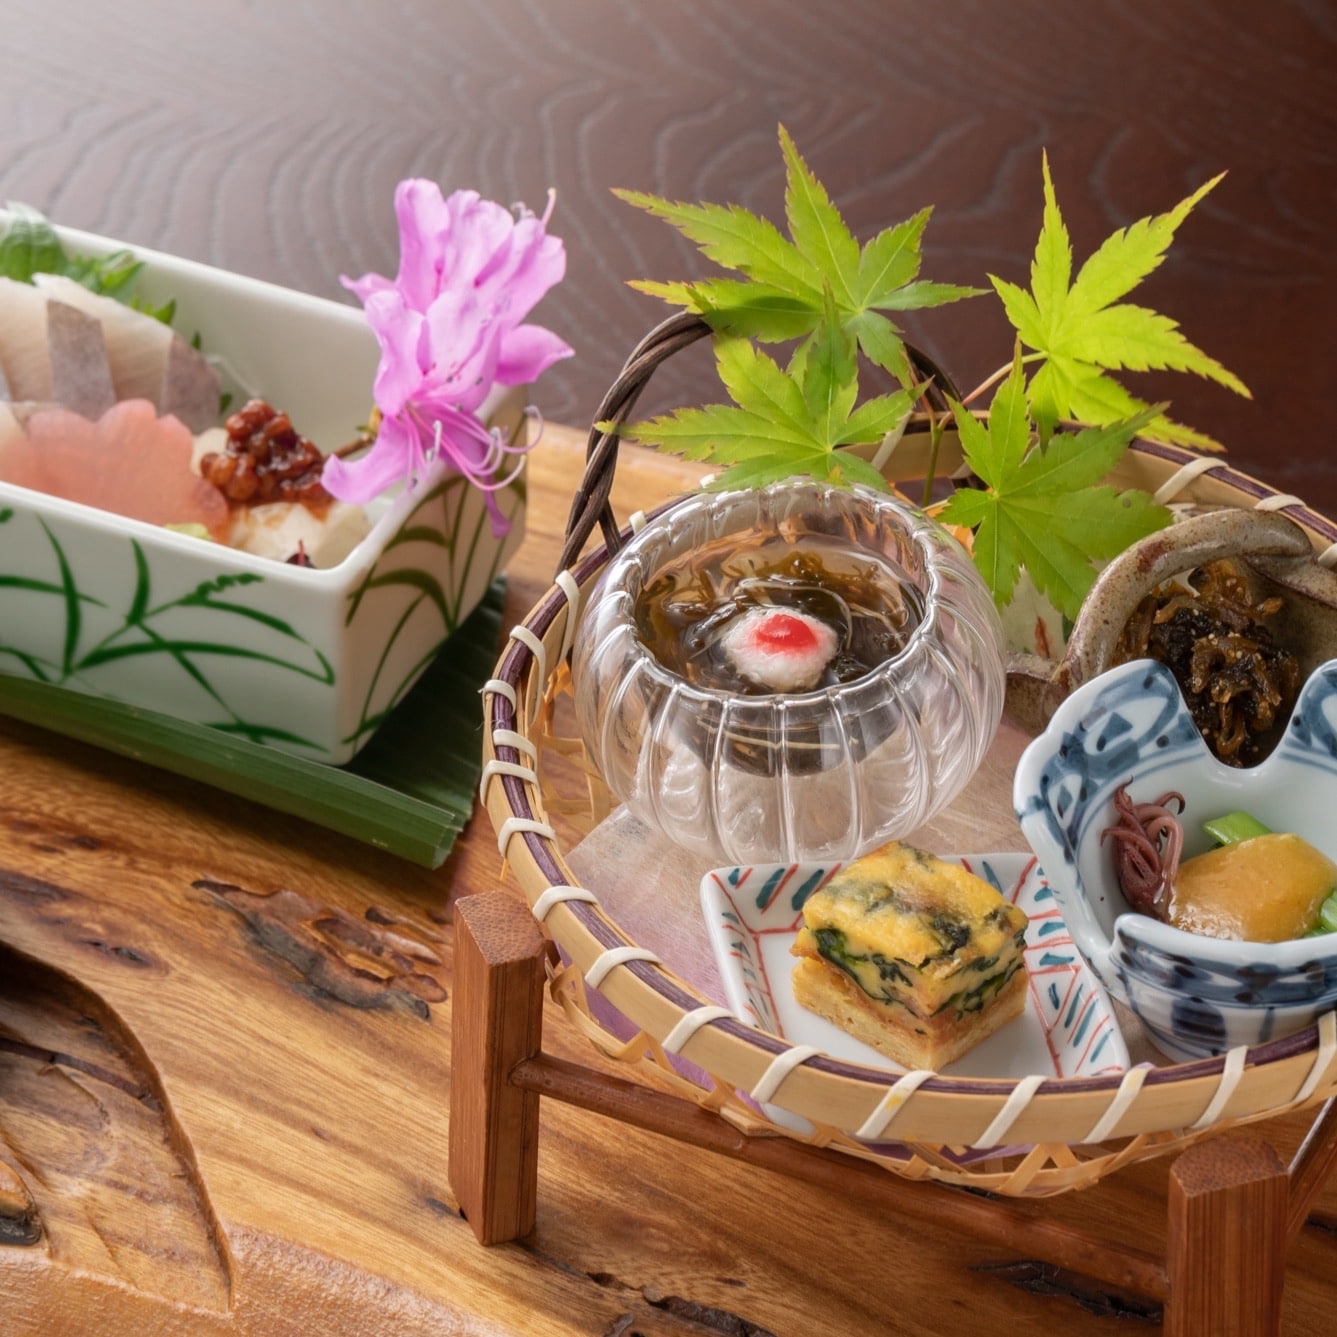 Please enjoy the seasonal taste of "Creative Cuisine Ichinokawa" with plenty of seasonal wild plants.